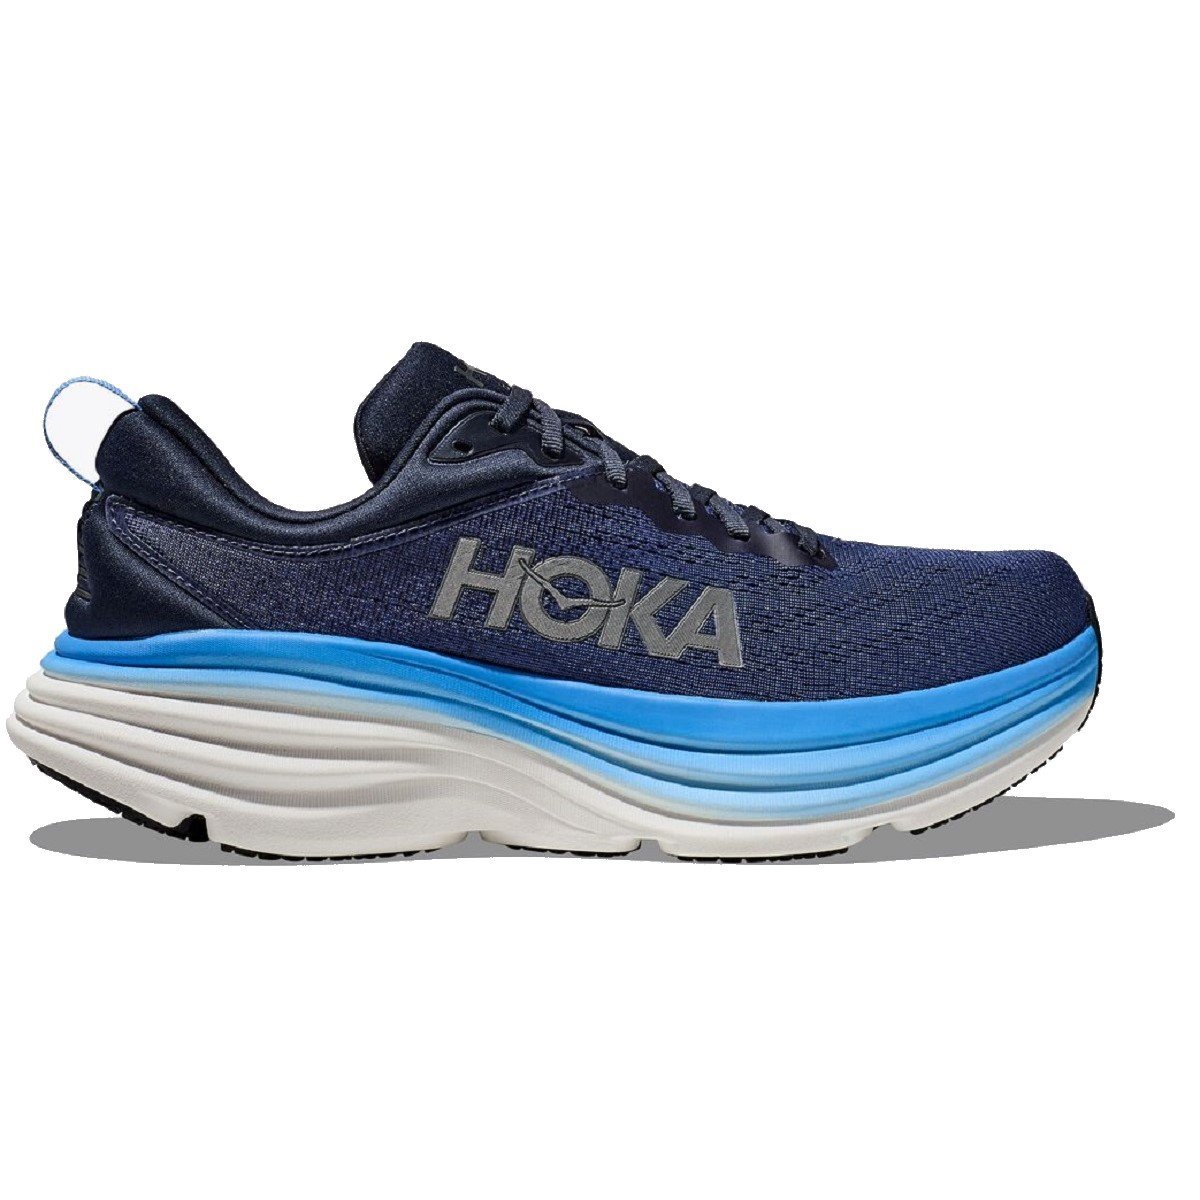 Topánky Hoka Bondi 8 M - blue